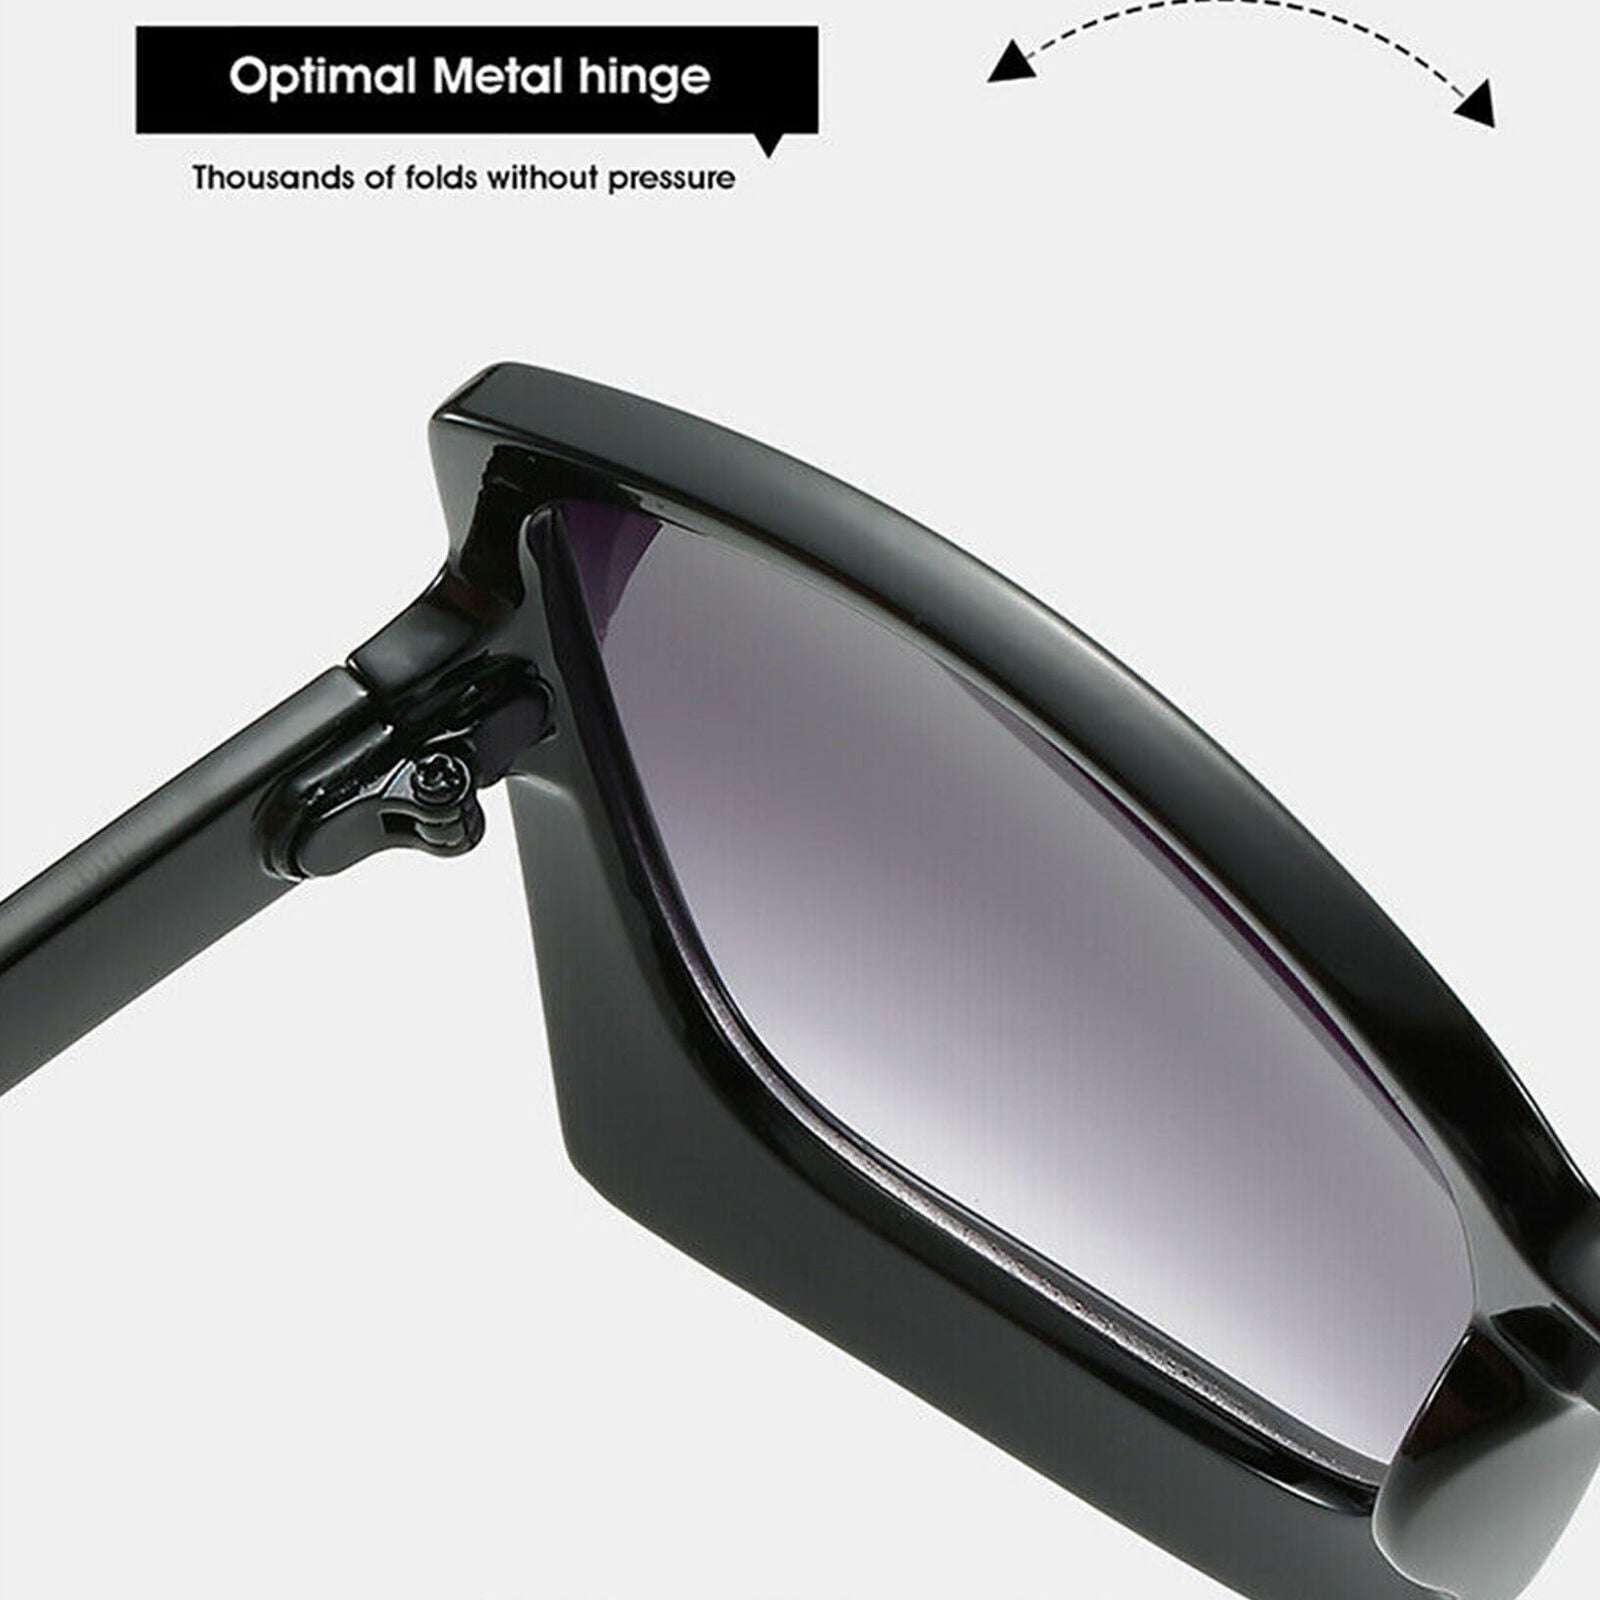 New 2020 Oversized Square Sunglasses Women Driving Outdoor Glasses Eyewear UV400